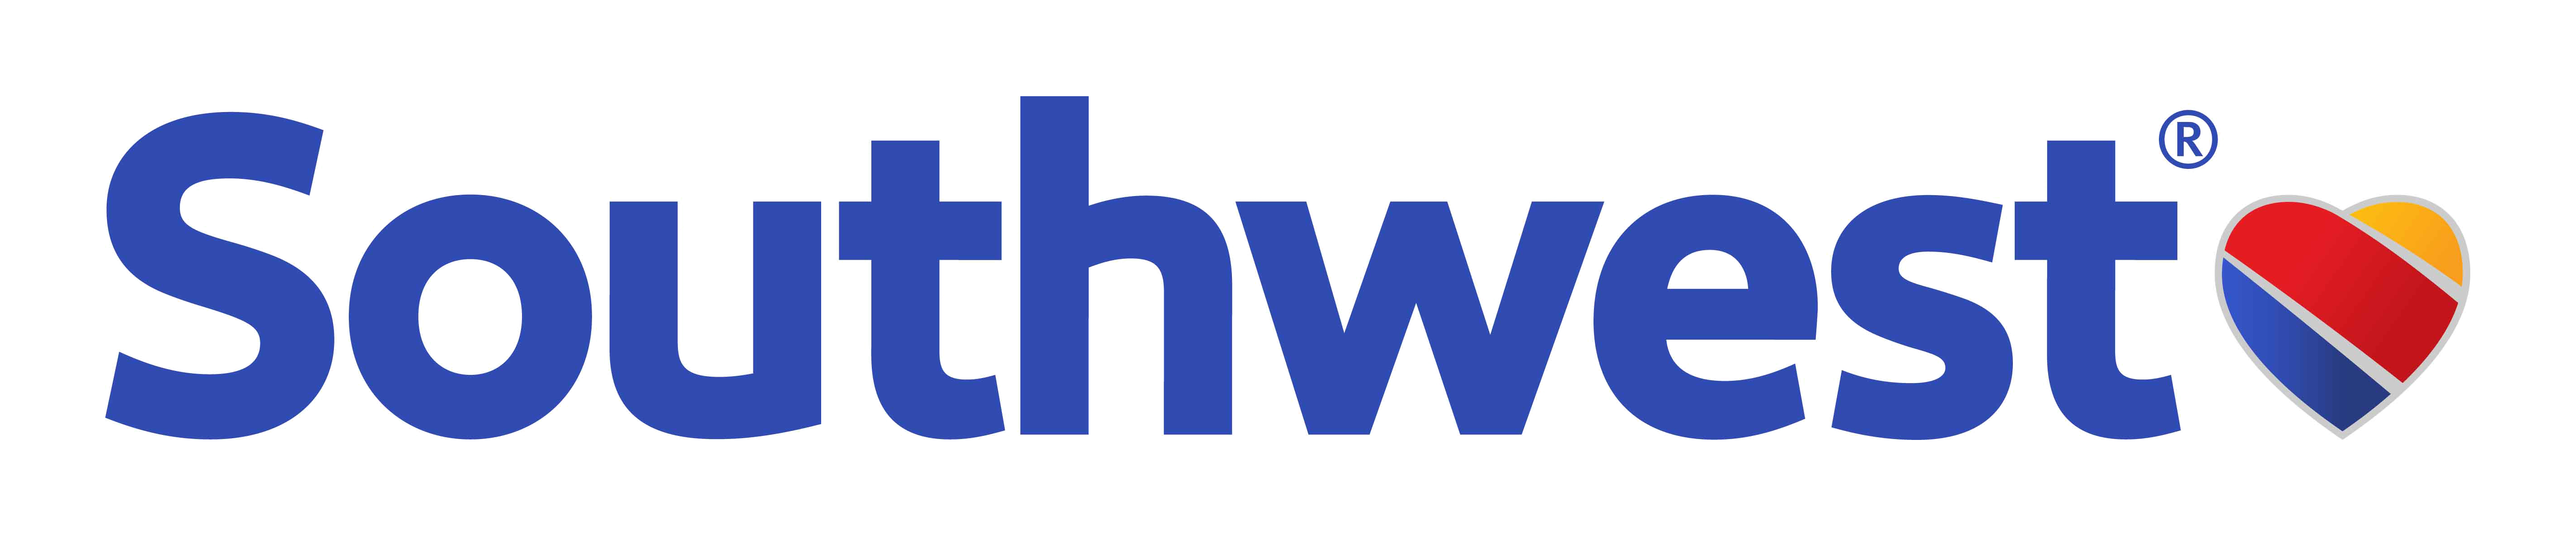 Southwest Airlines Logo PNG Image